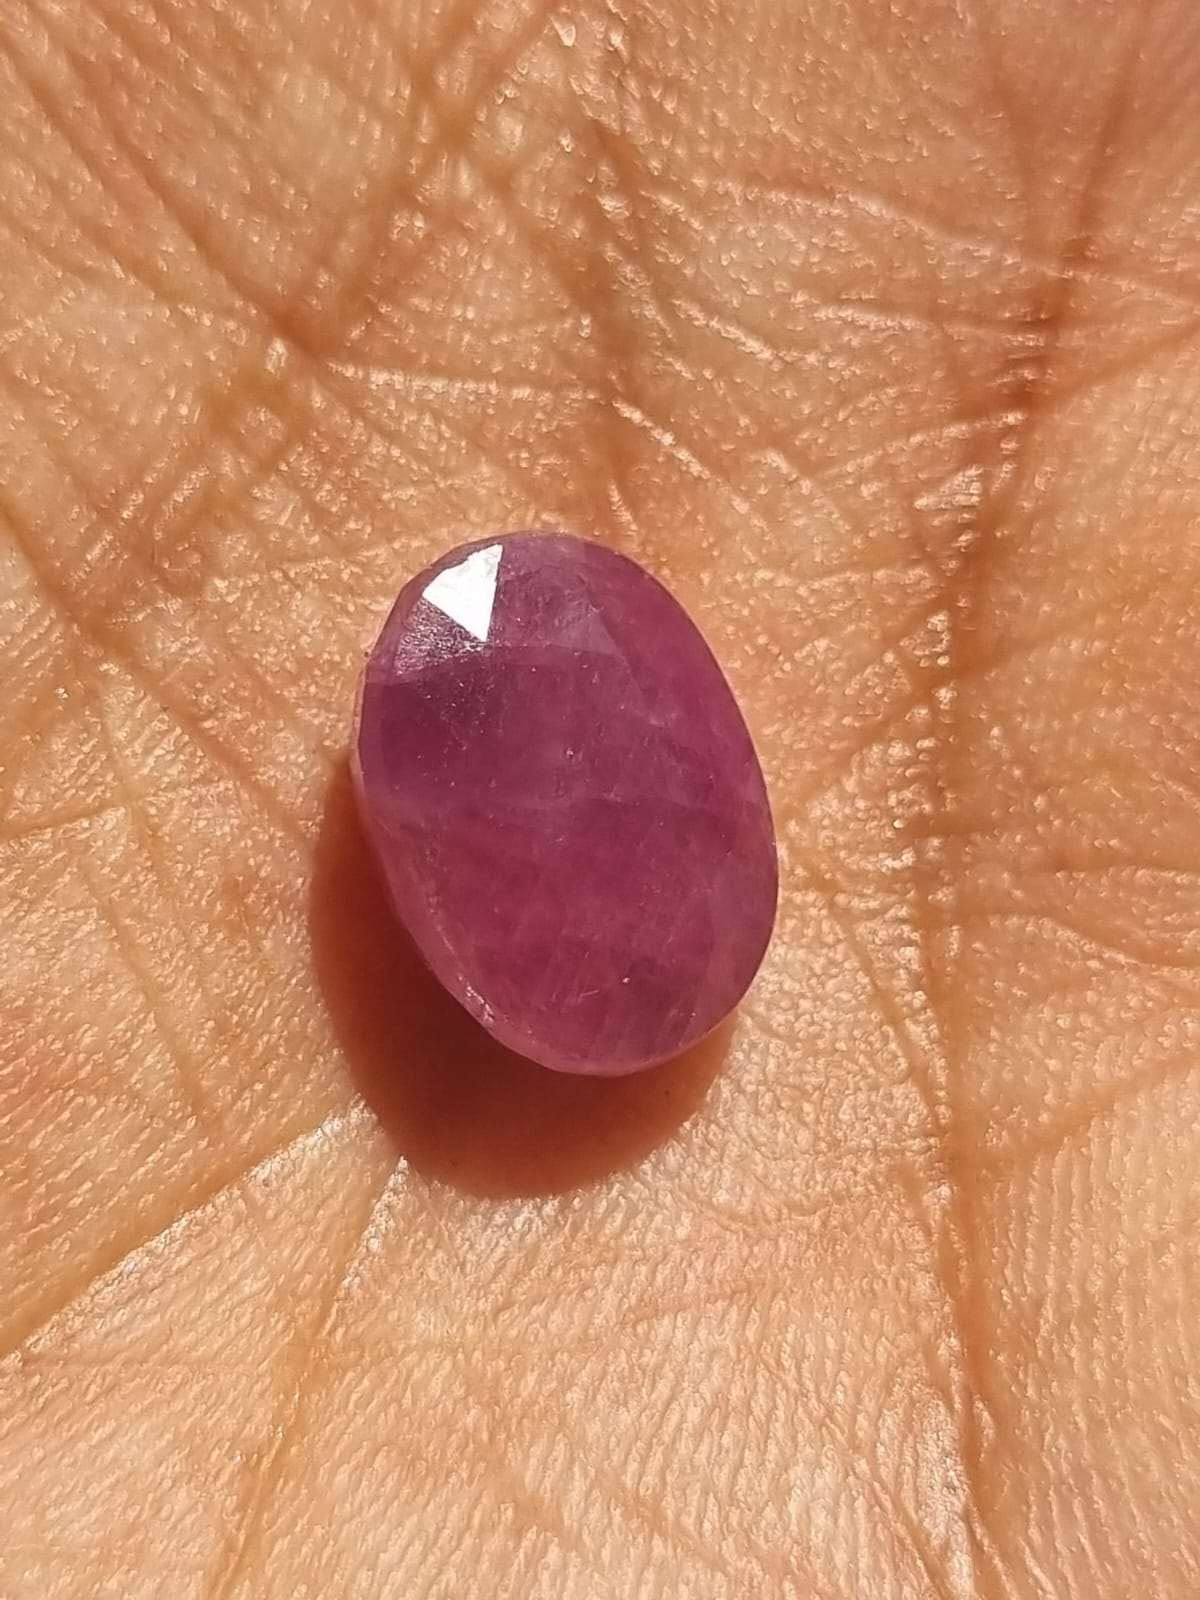 Vedic Crystals Ruby gemstone (manik nag) 10 ratti best price image 1454